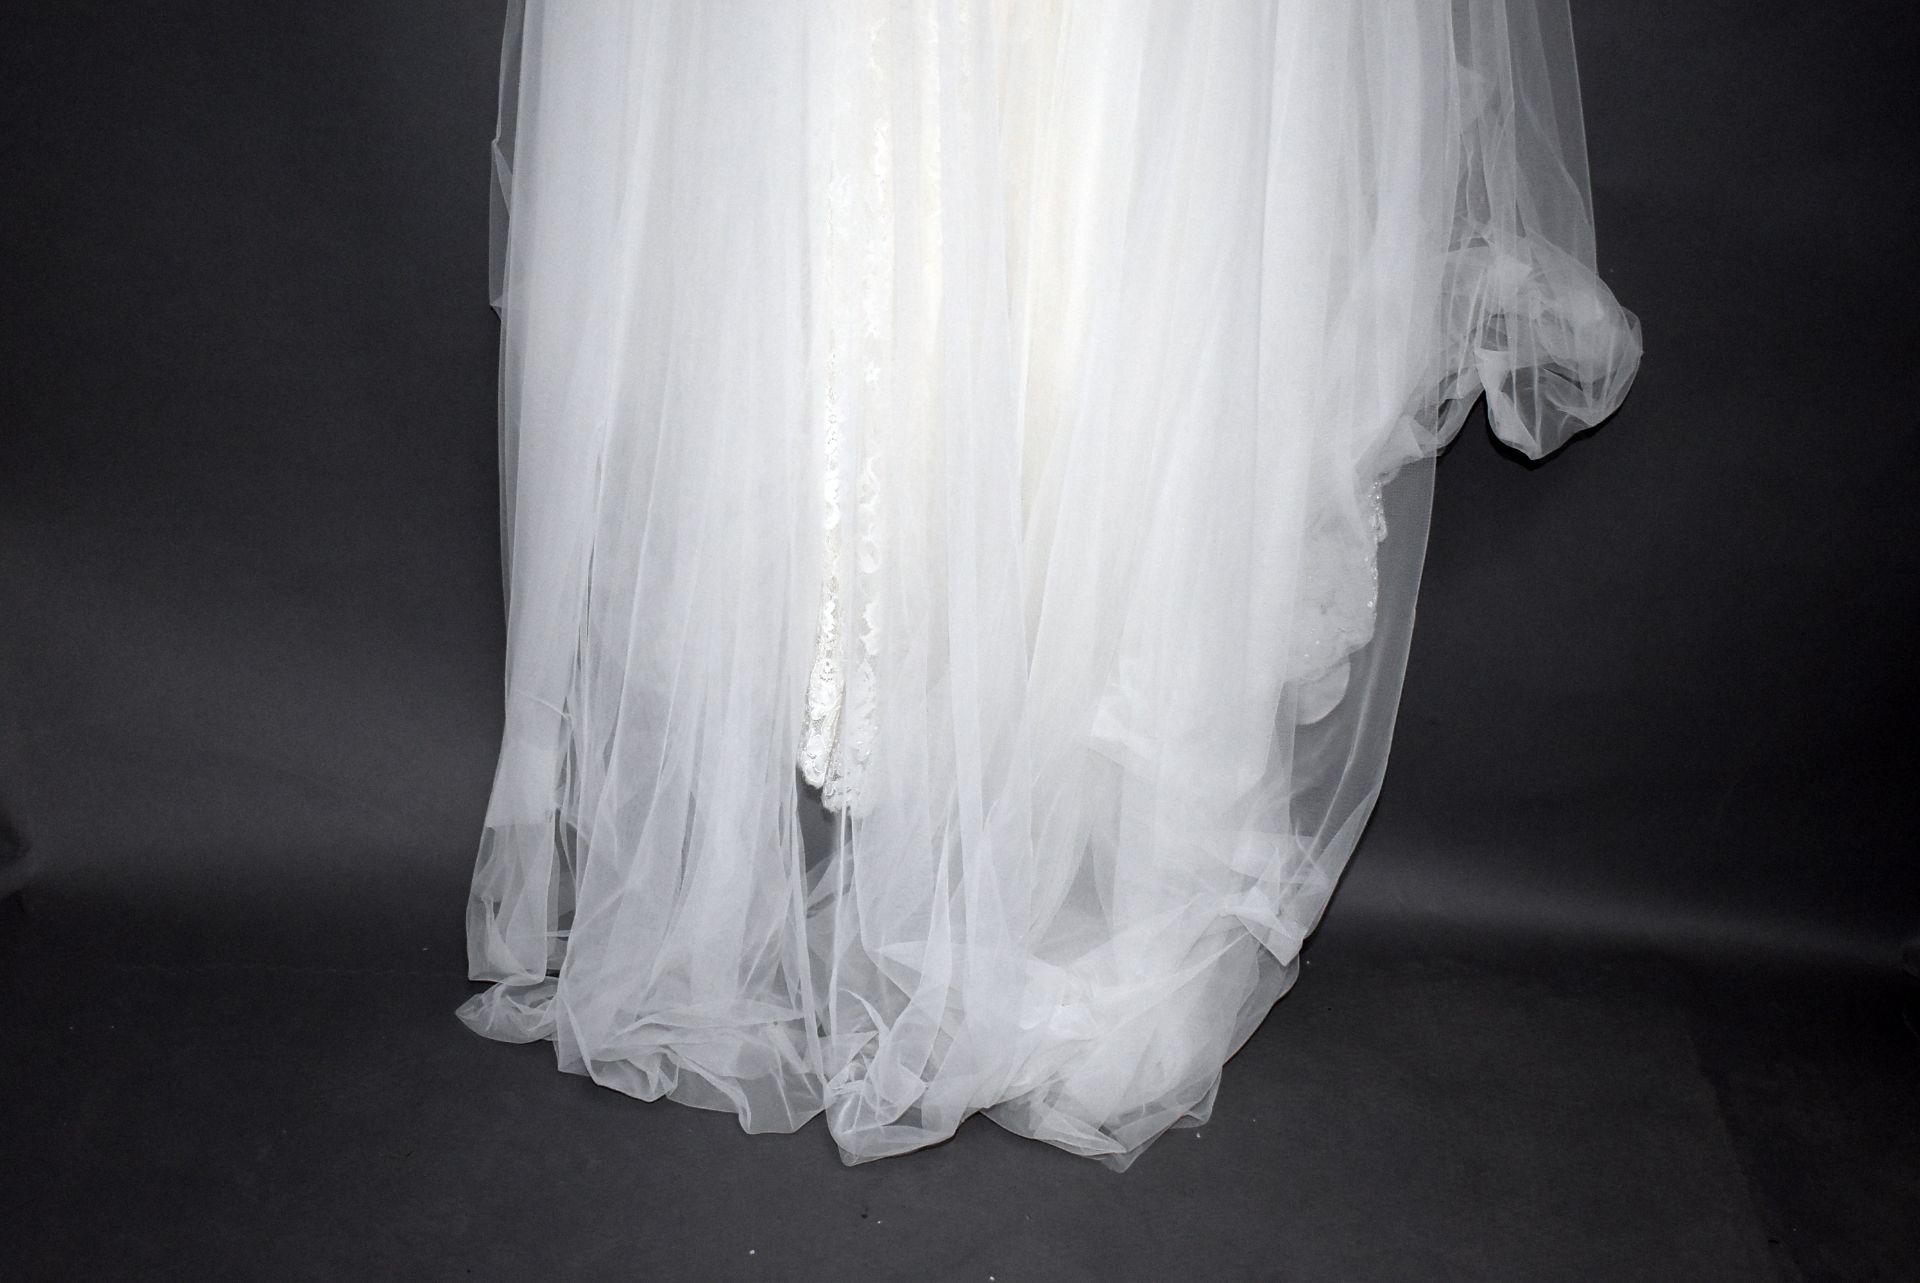 1 x LUSAN MANDONGUS Lace And Chiffon Designer Wedding Dress Bridal Gown RRP £1,450 UK 12 - Image 6 of 6